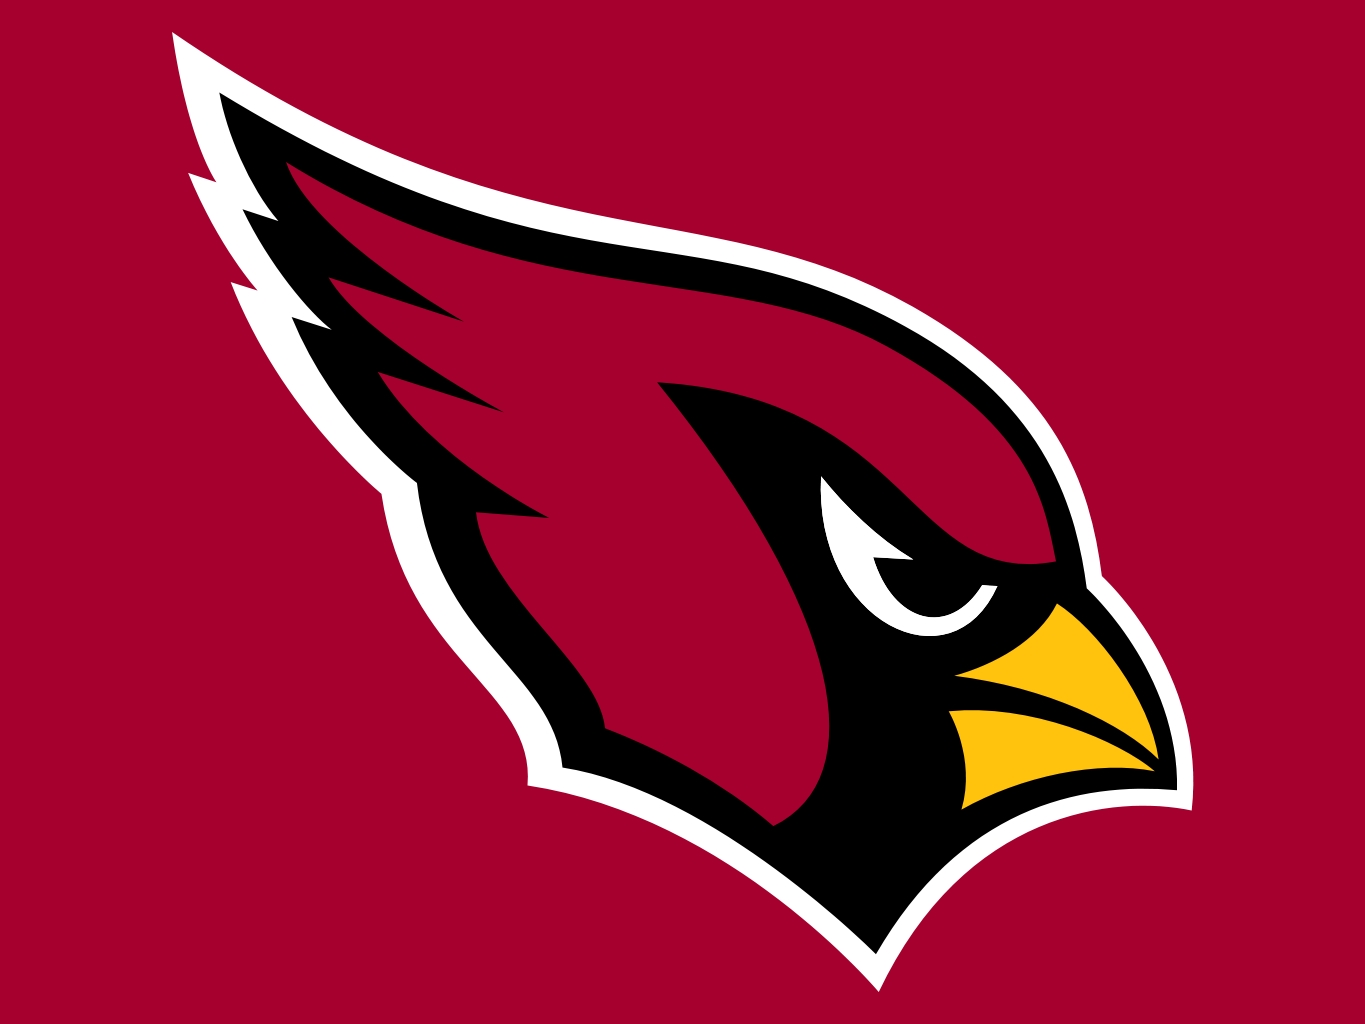 Clipart of Arizona Cardinals Logo free image